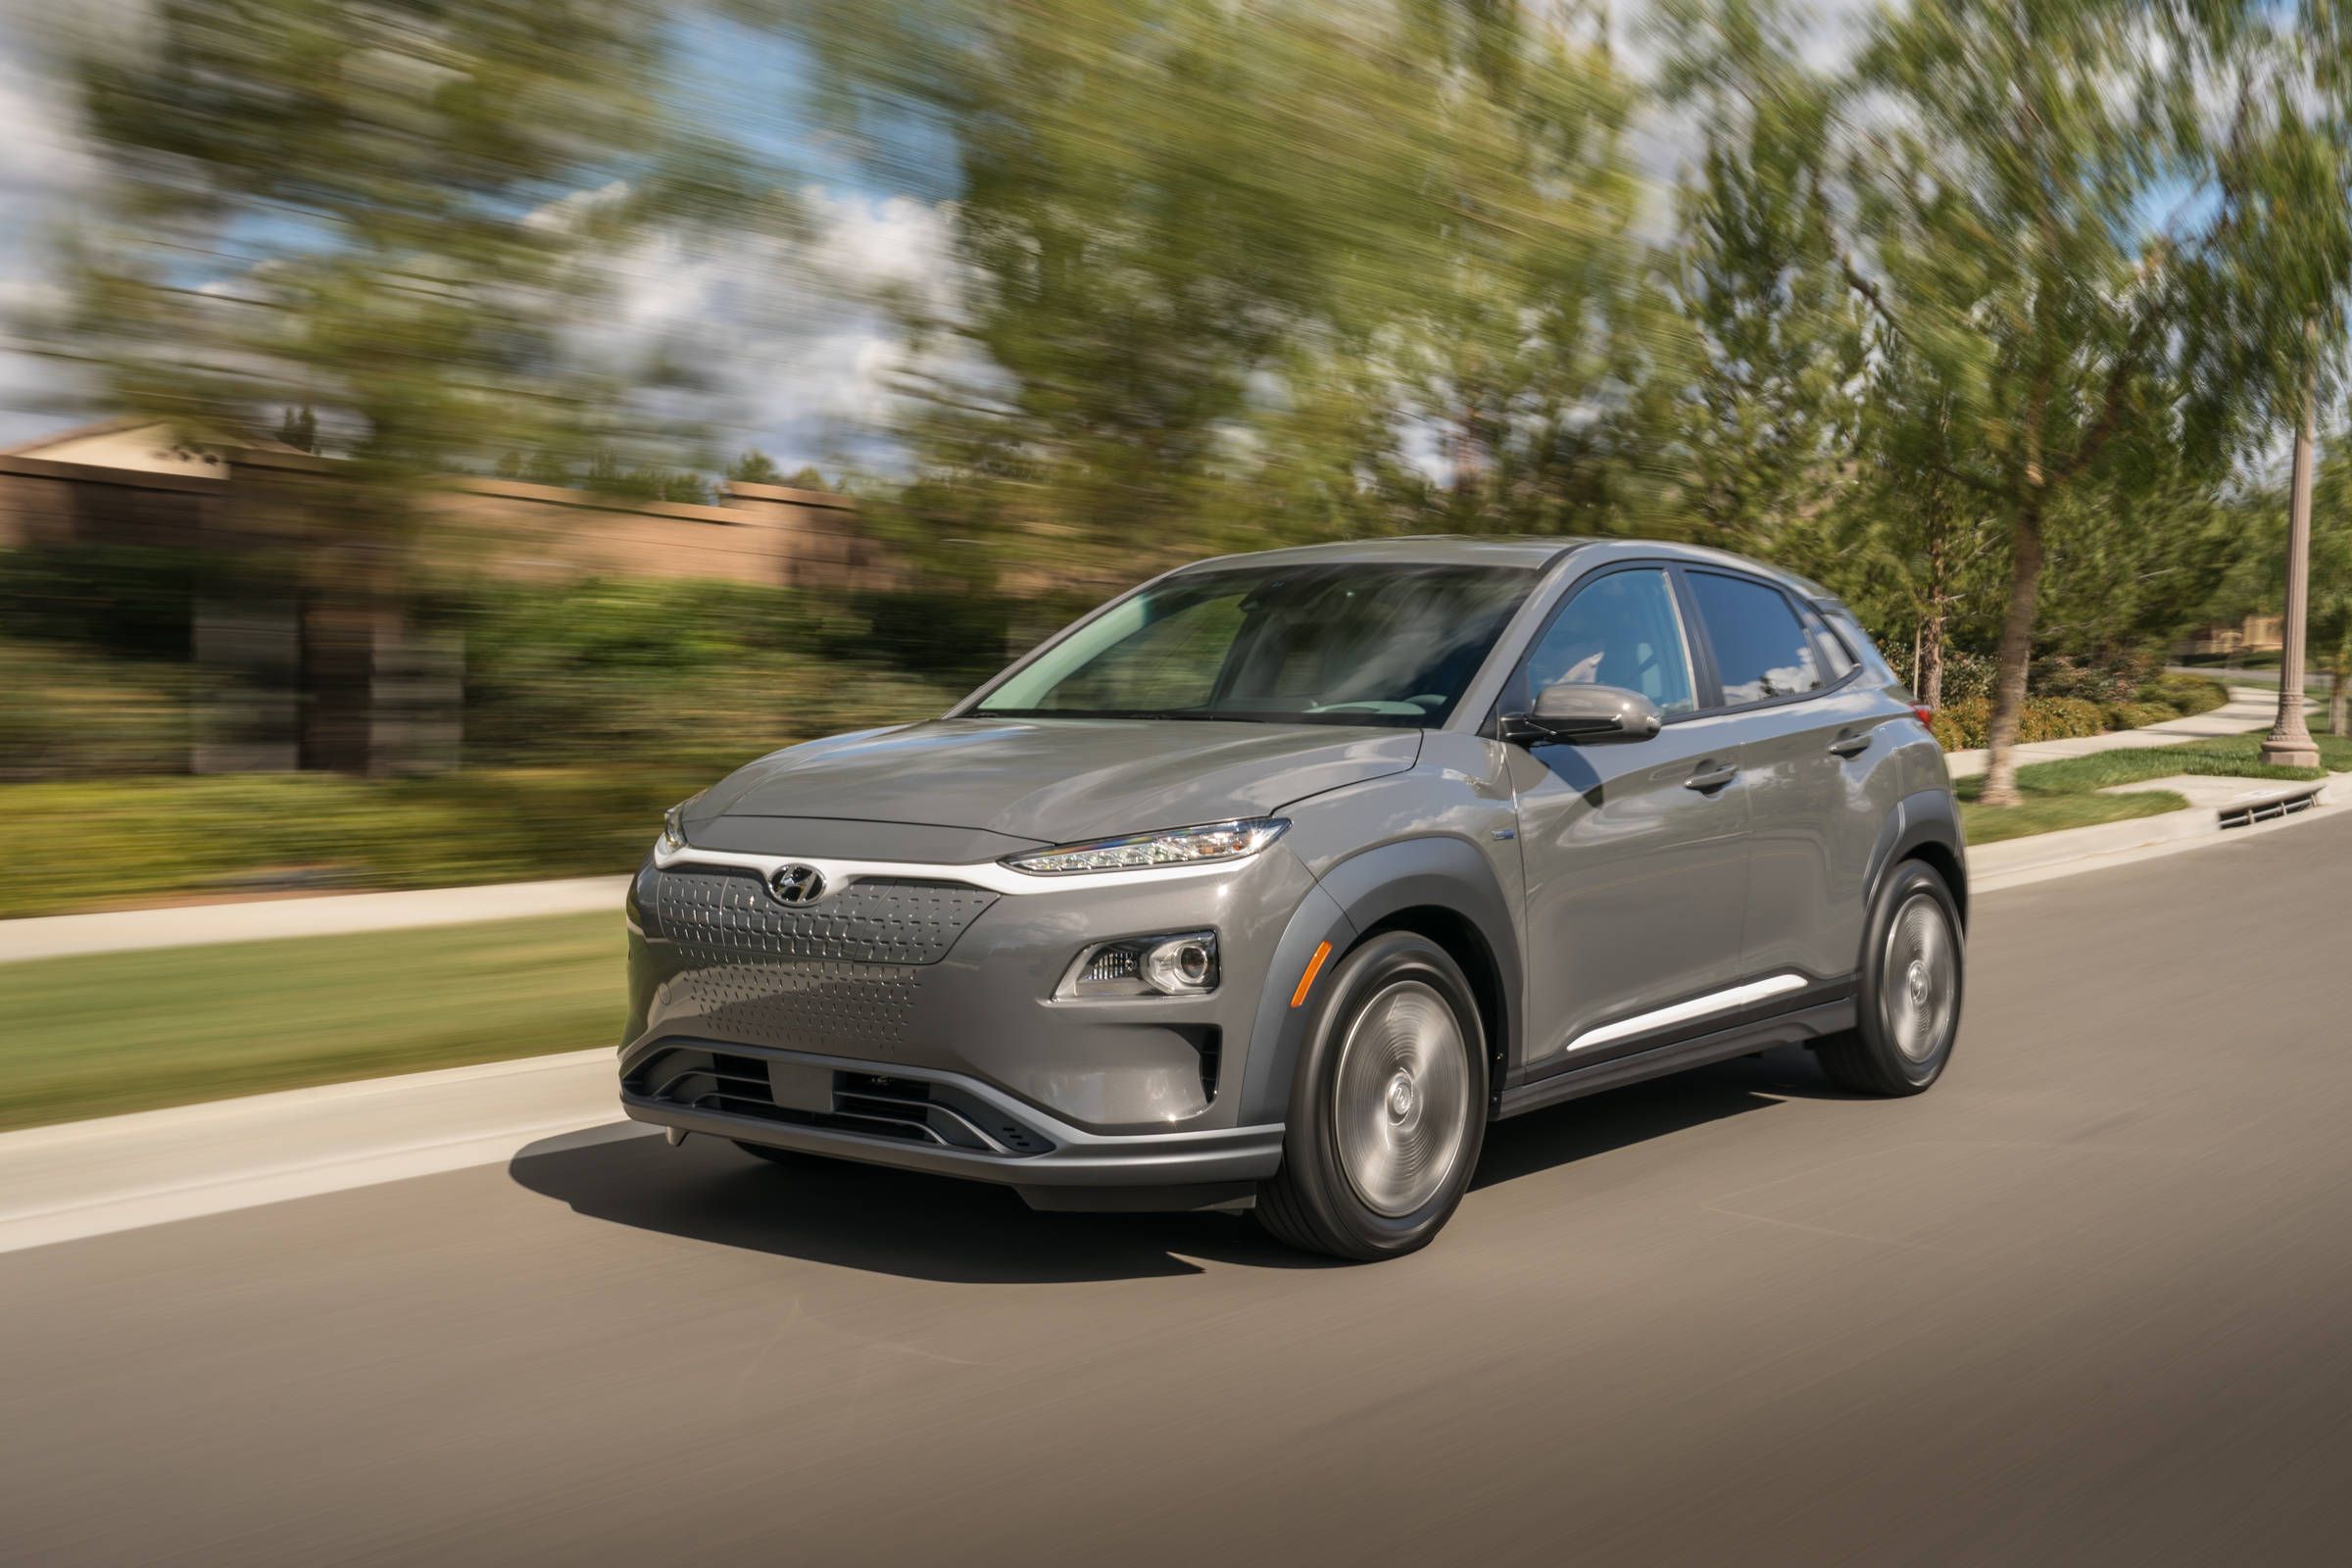 2019 Hyundai Kona EV essentials: No compromise, in California